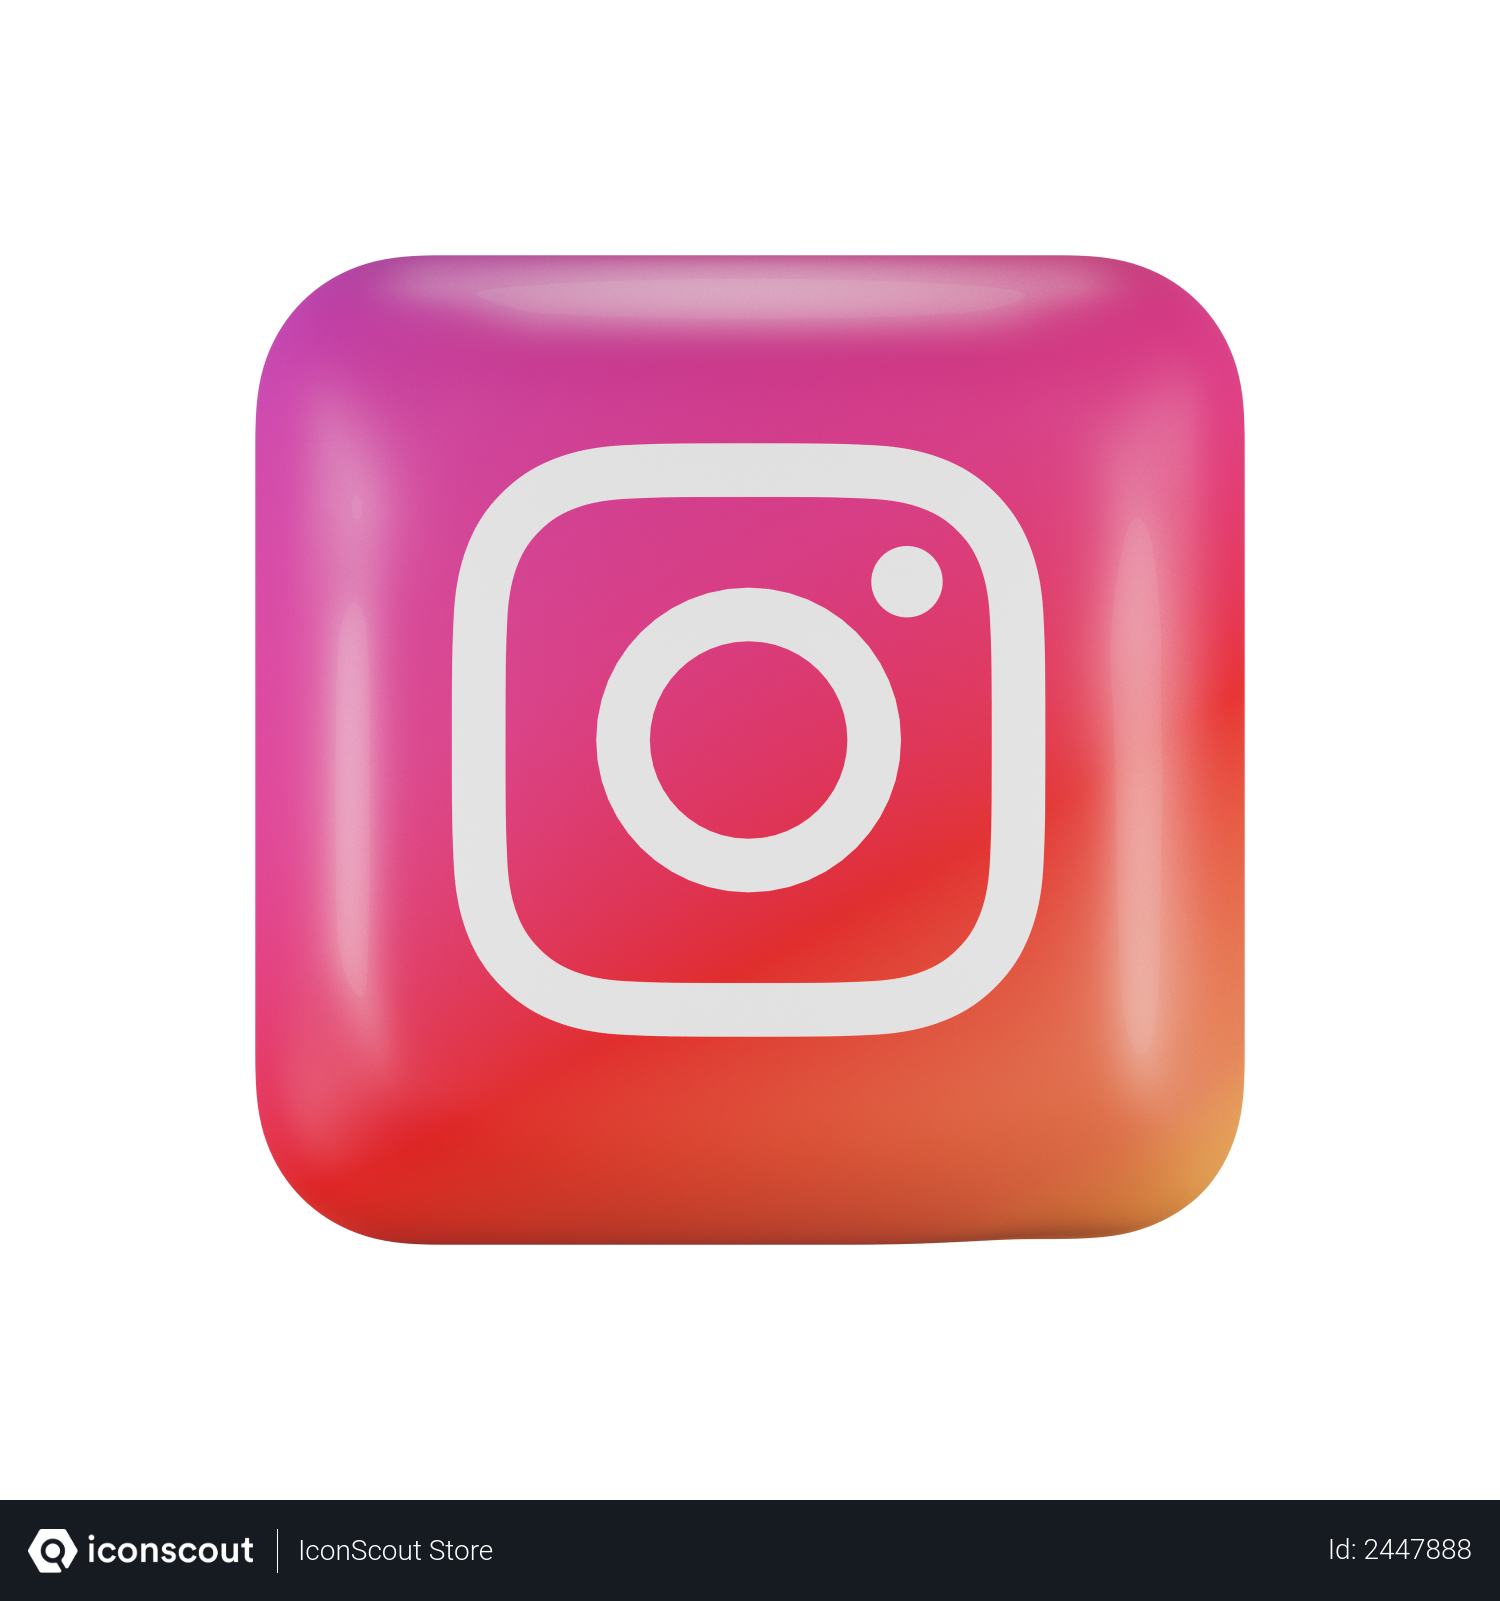 Premium PSD | Instagram app 3d render logo icon isolated for social media  premium psd